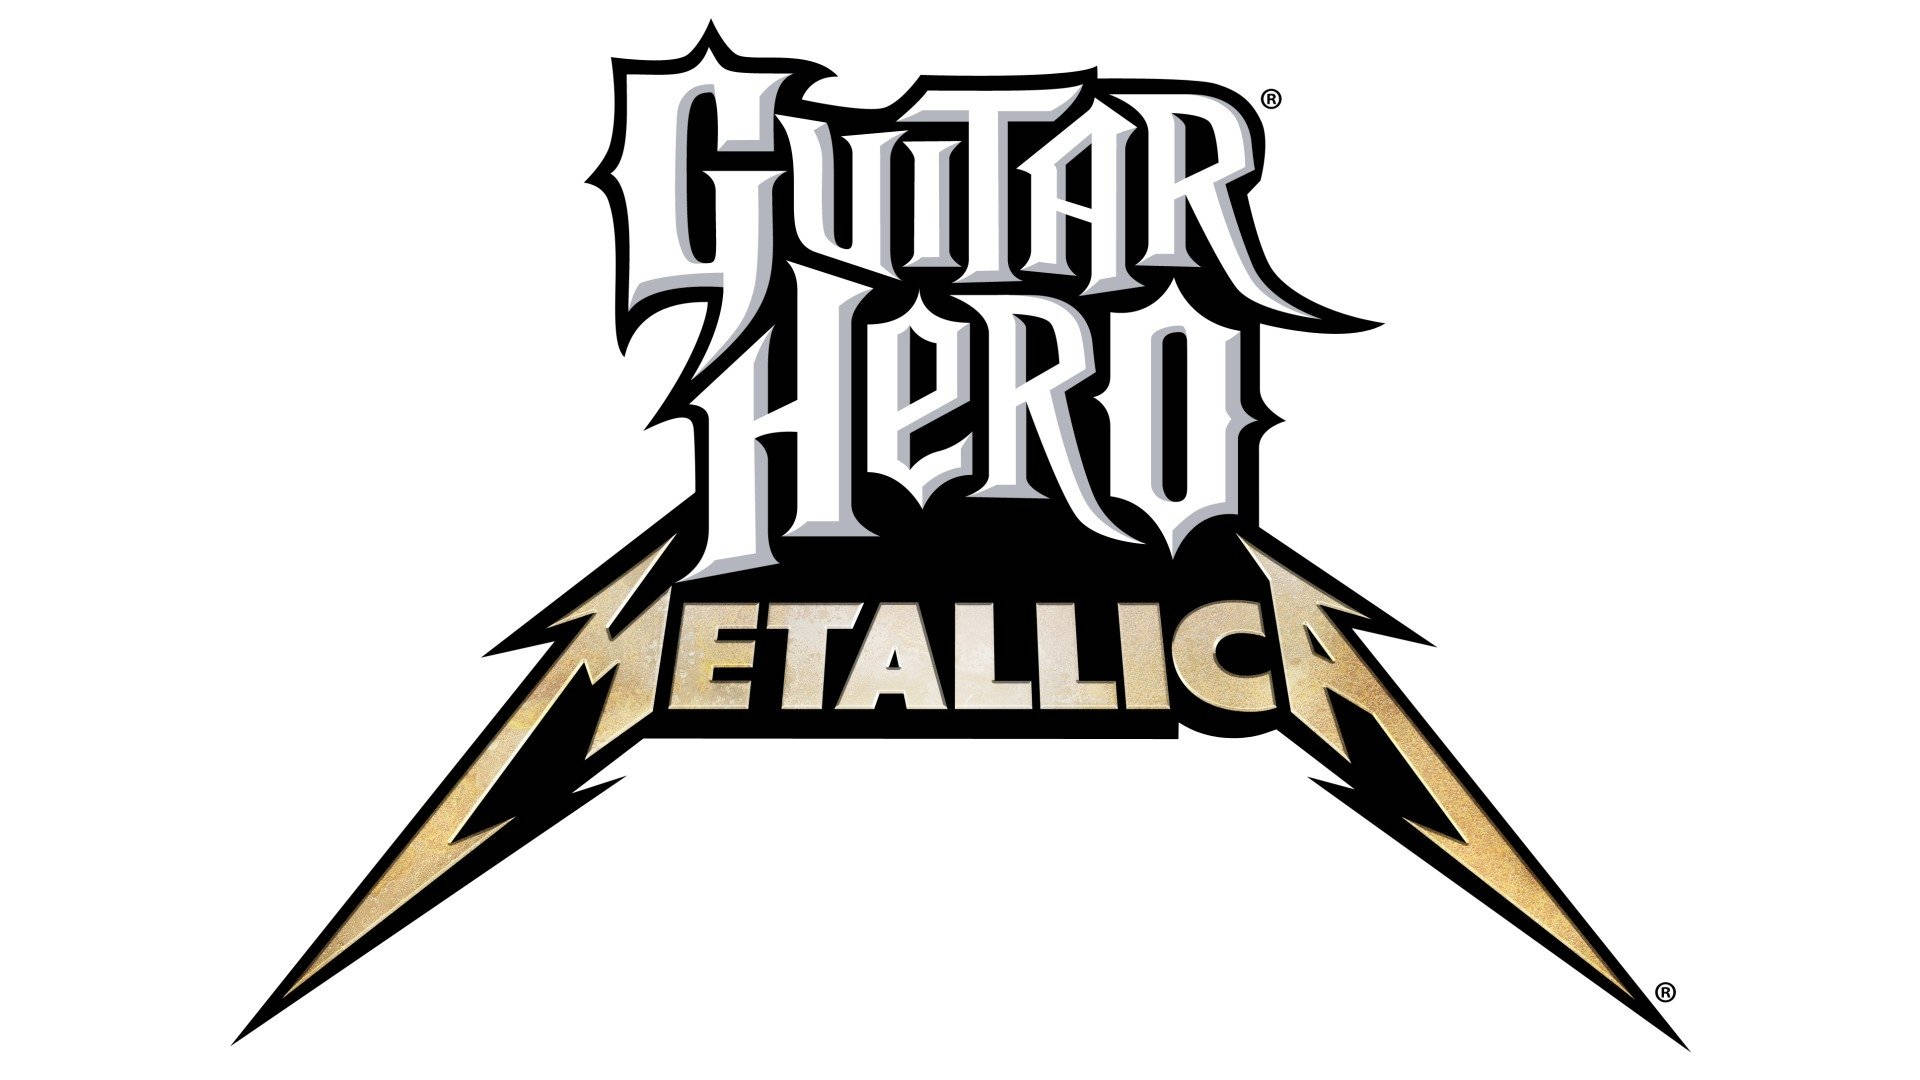 Guitar Hero Metallica In White